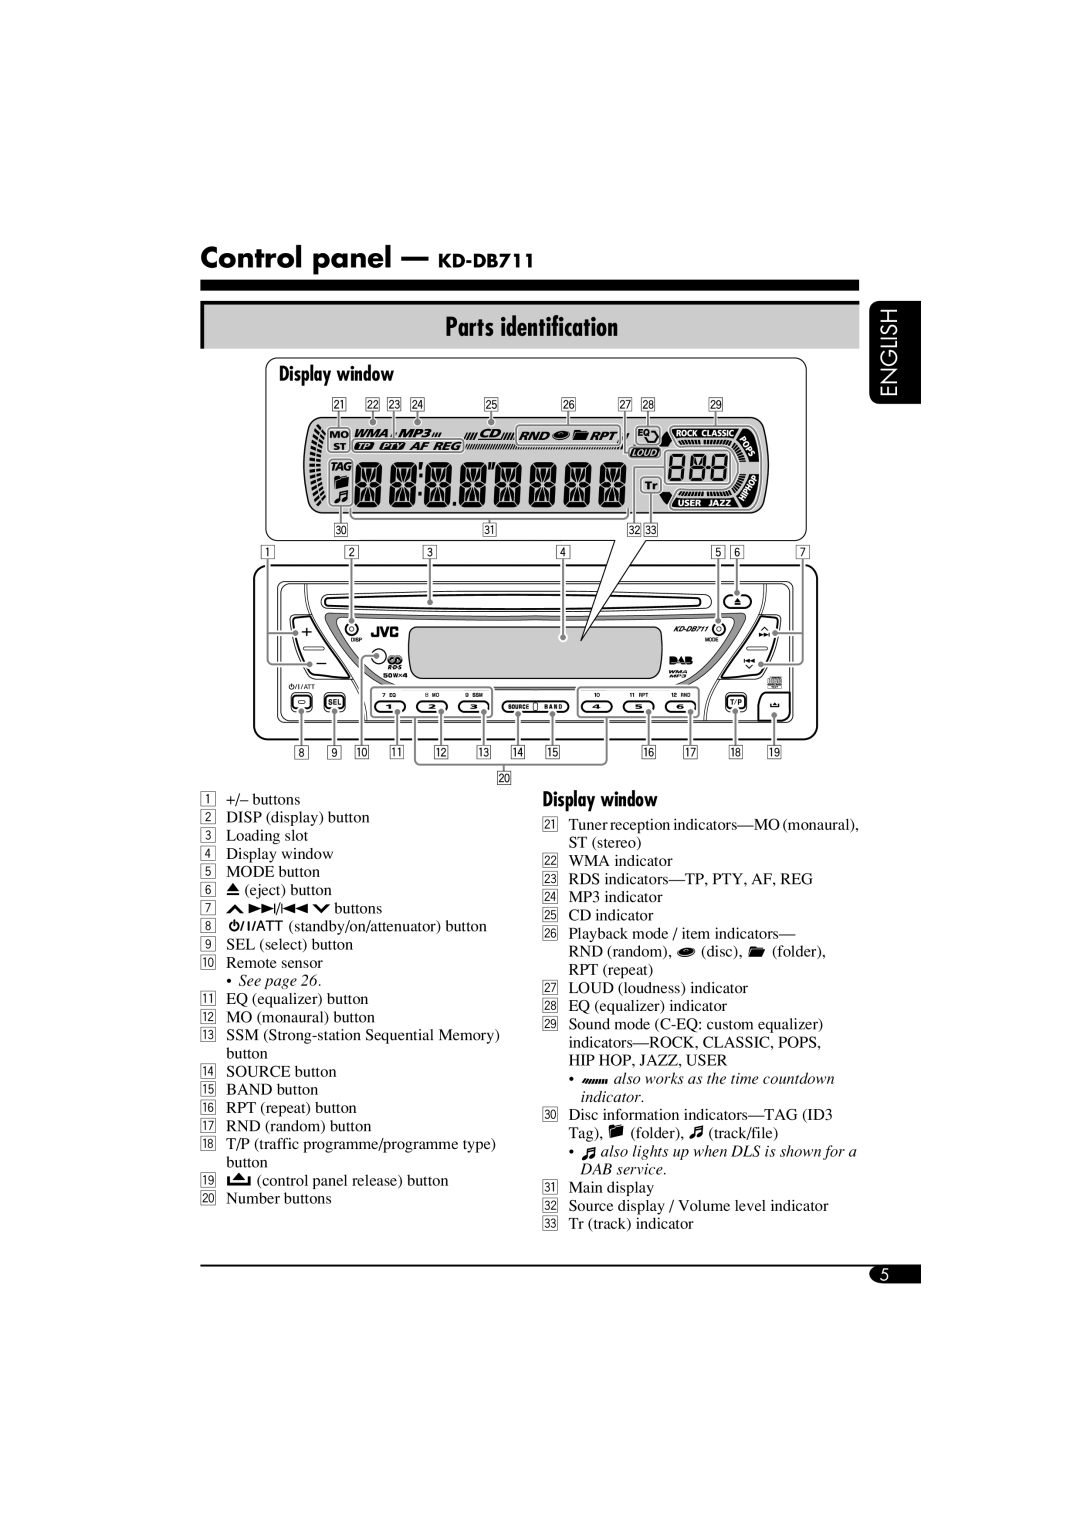 JVC manual Control panel - KD-DB711, Parts identification, Display window, English 